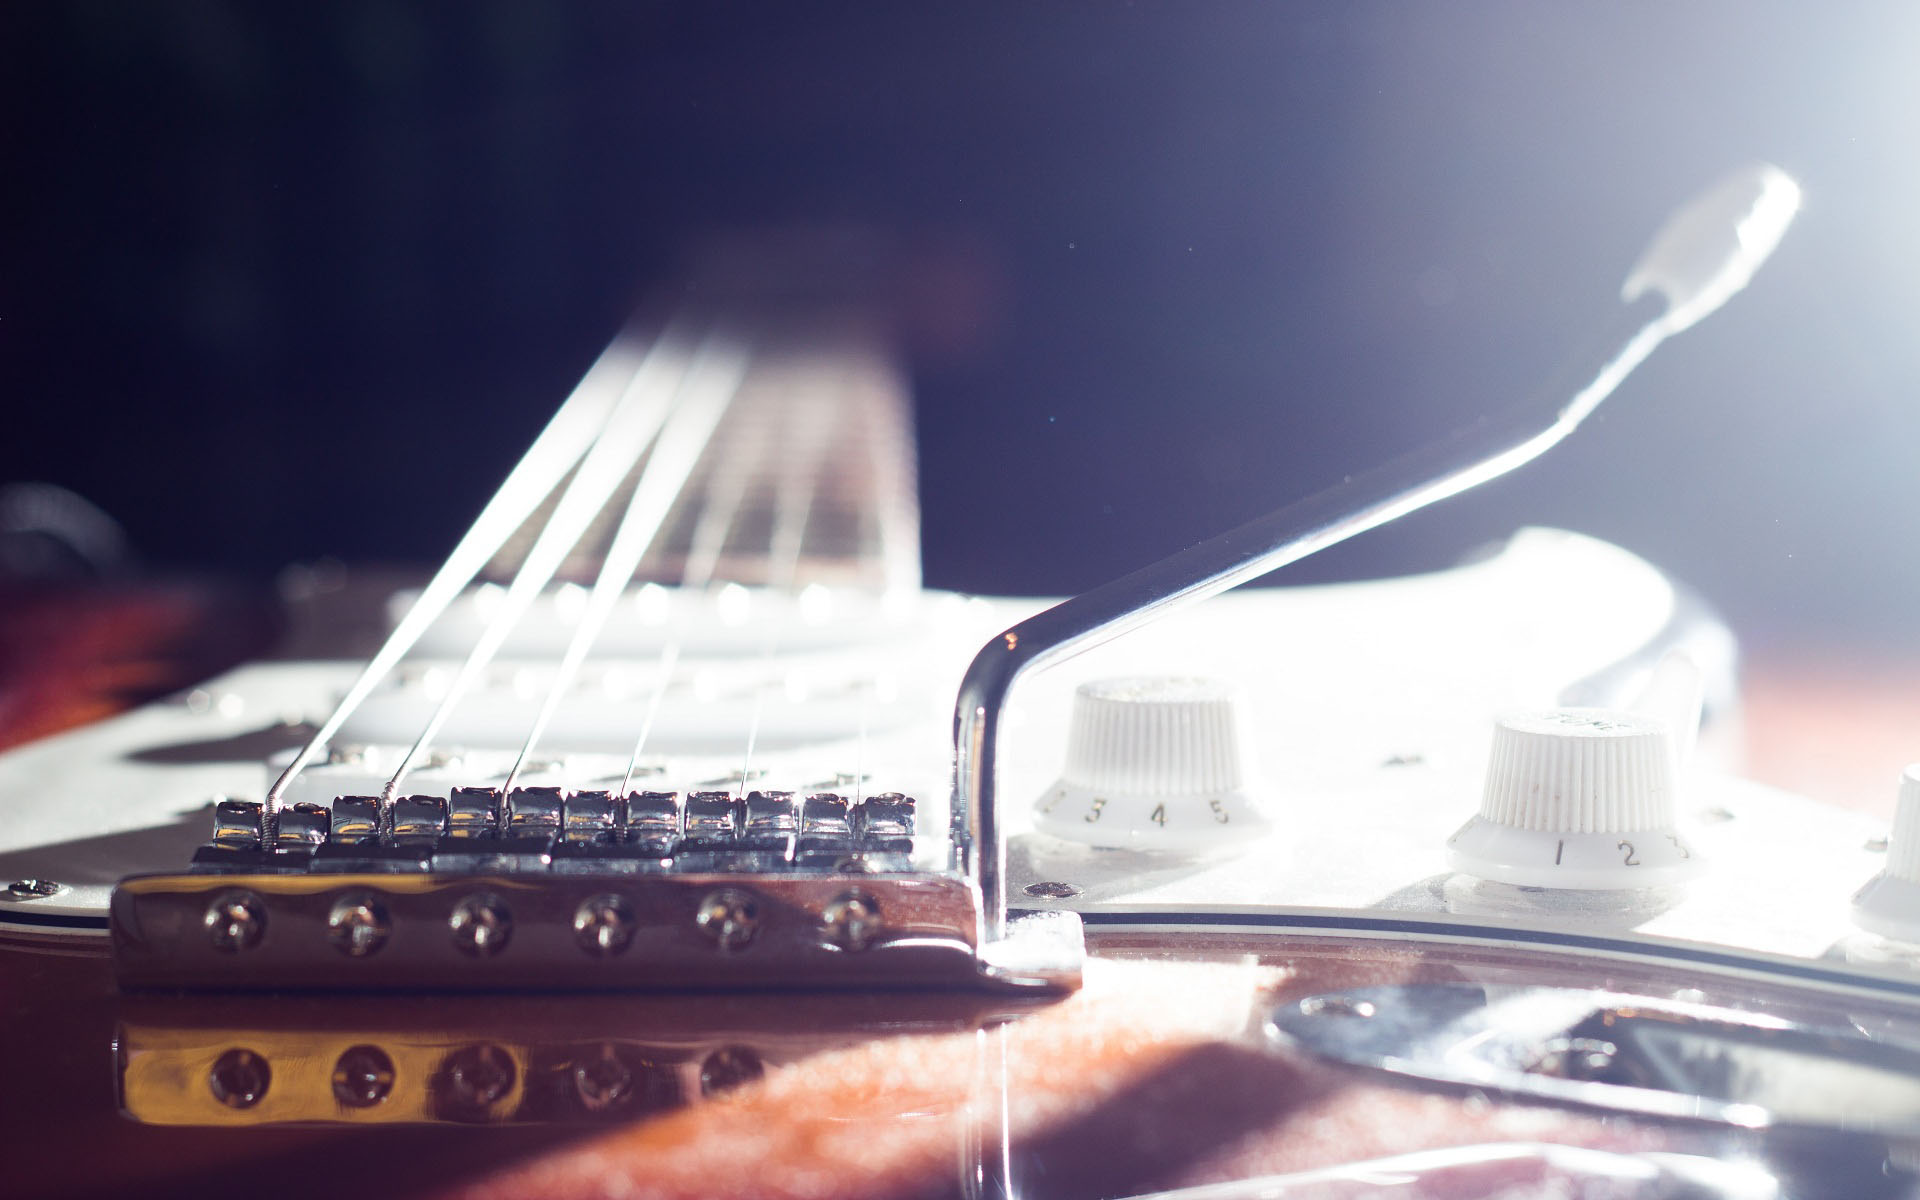 Download mobile wallpaper Guitar, Music for free.